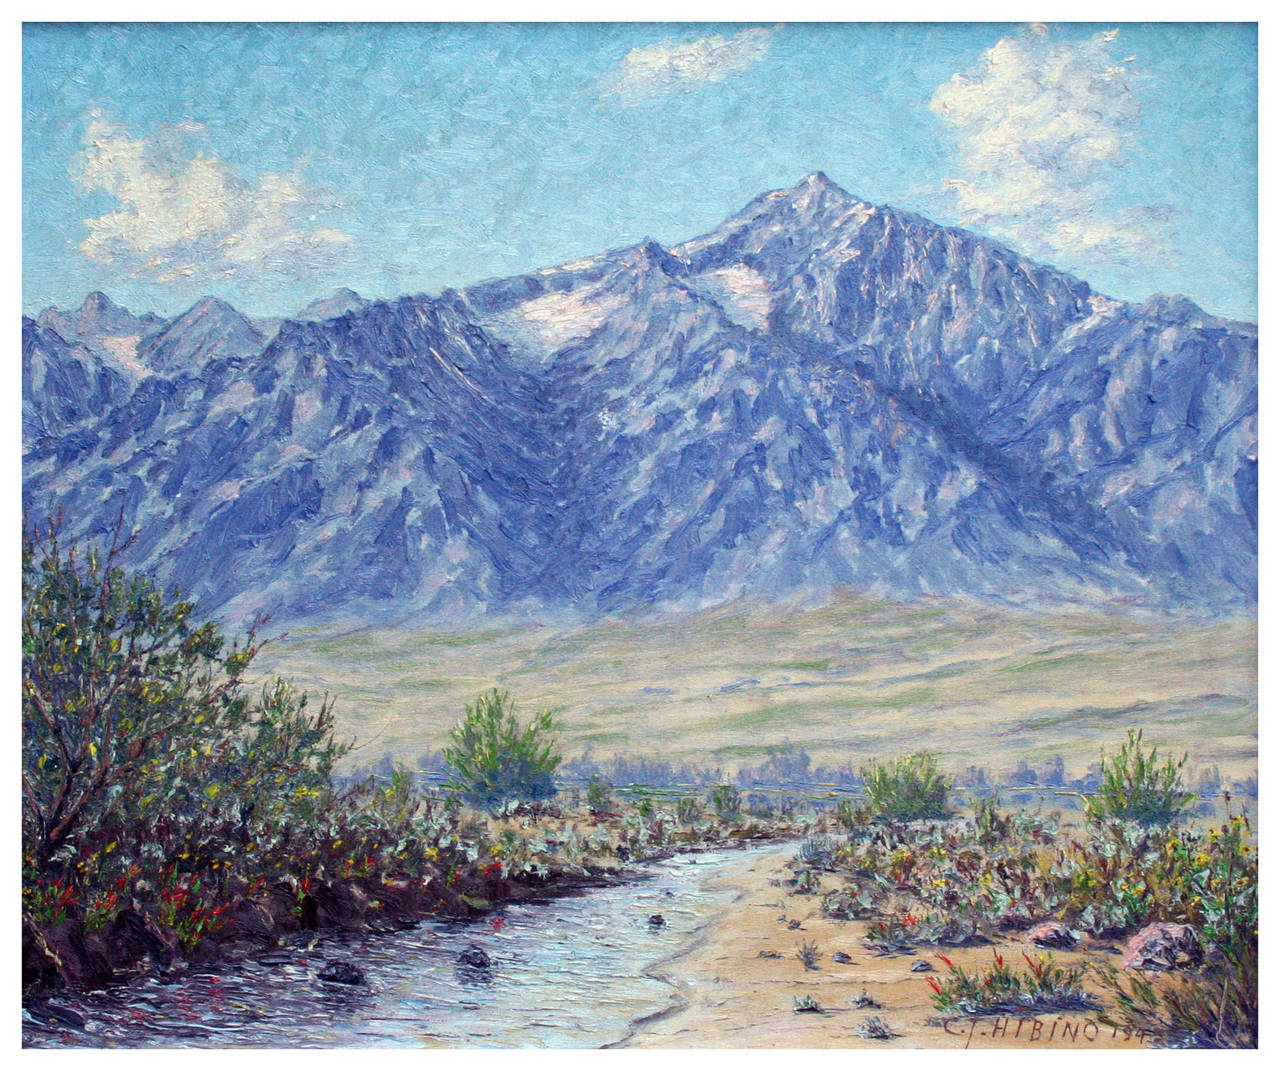 Mt. Williamson from Manzanar, 1945 - Painting by Carl Hibino